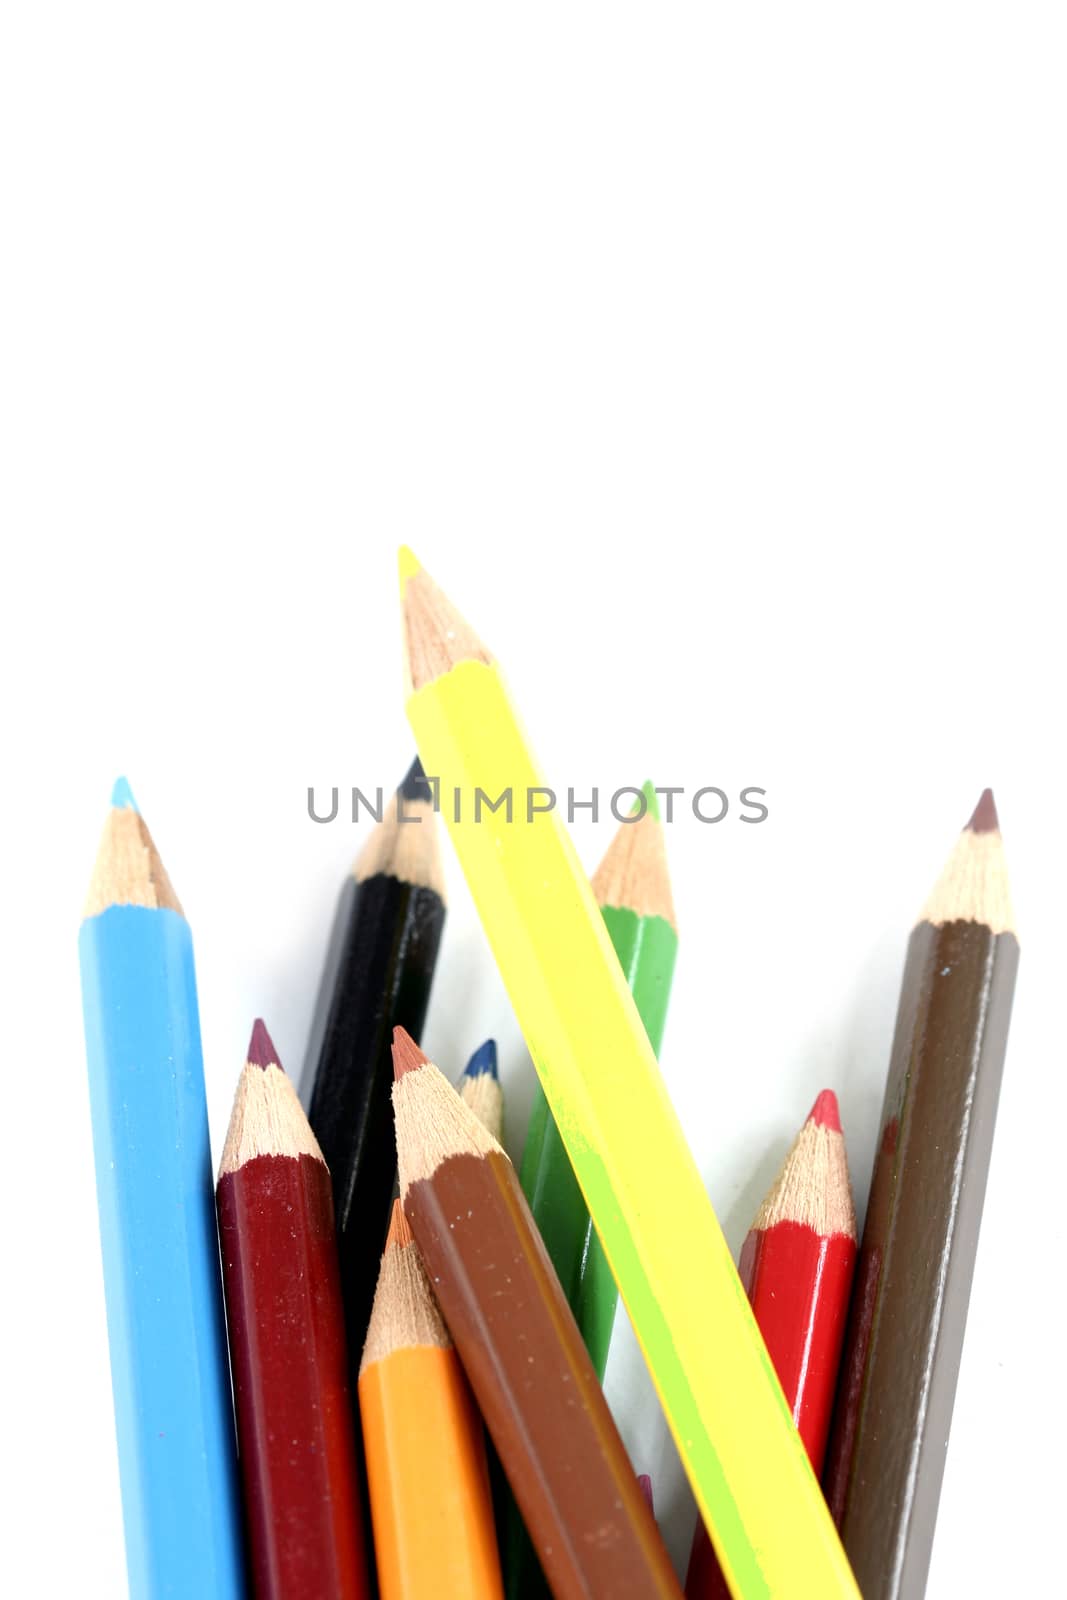 Close-up pencil. by arosoft